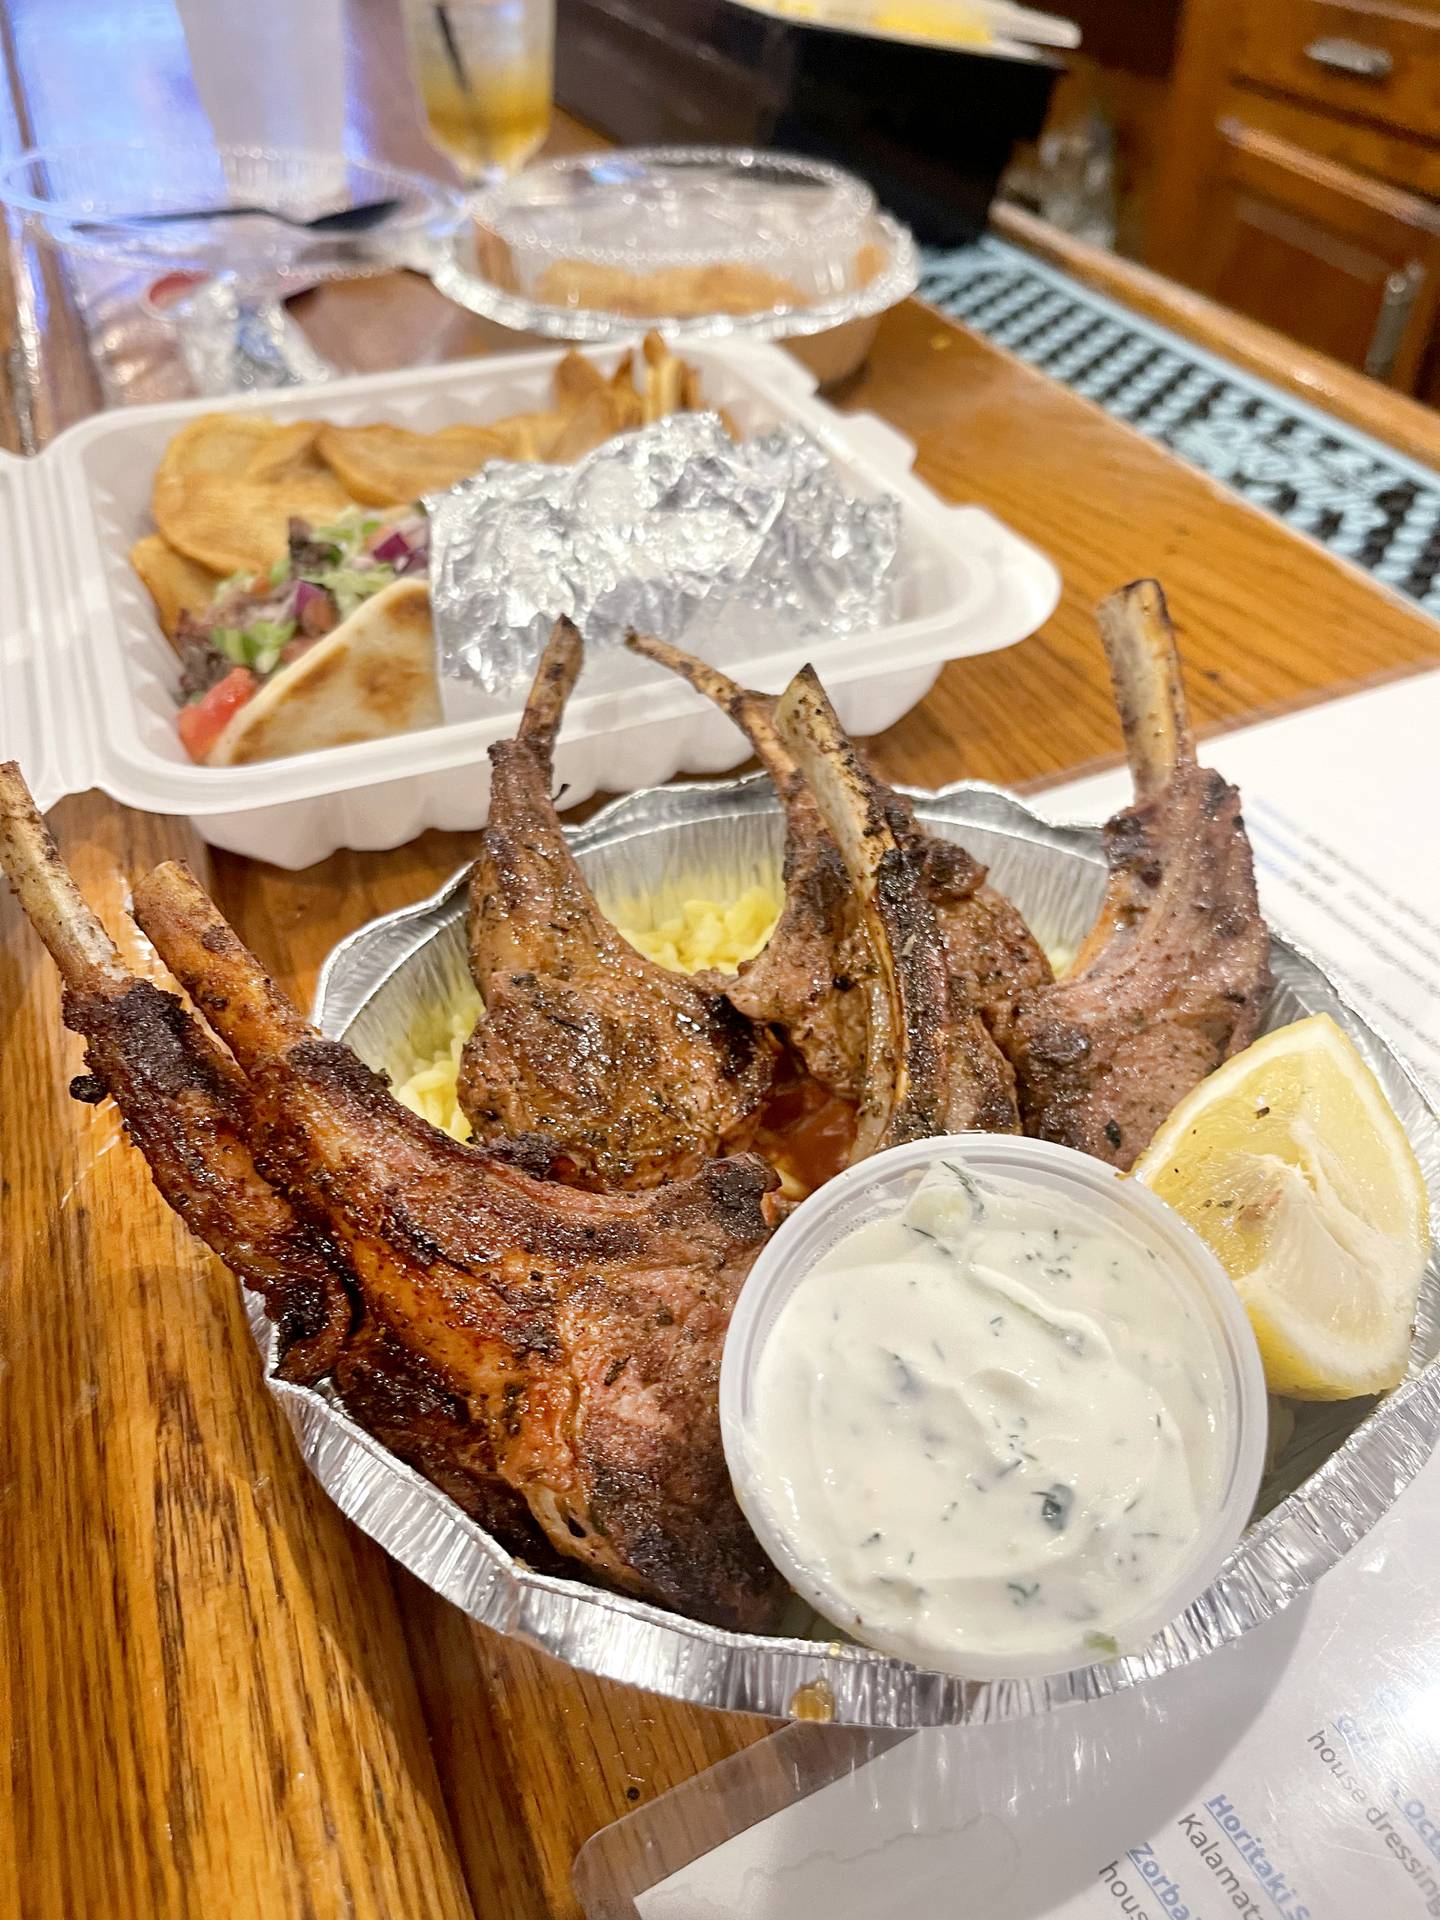 Charm City Table: Το Zorba’s Bar & Grill στο Greektown προσφέρει ένα χορταστικό γεύμα